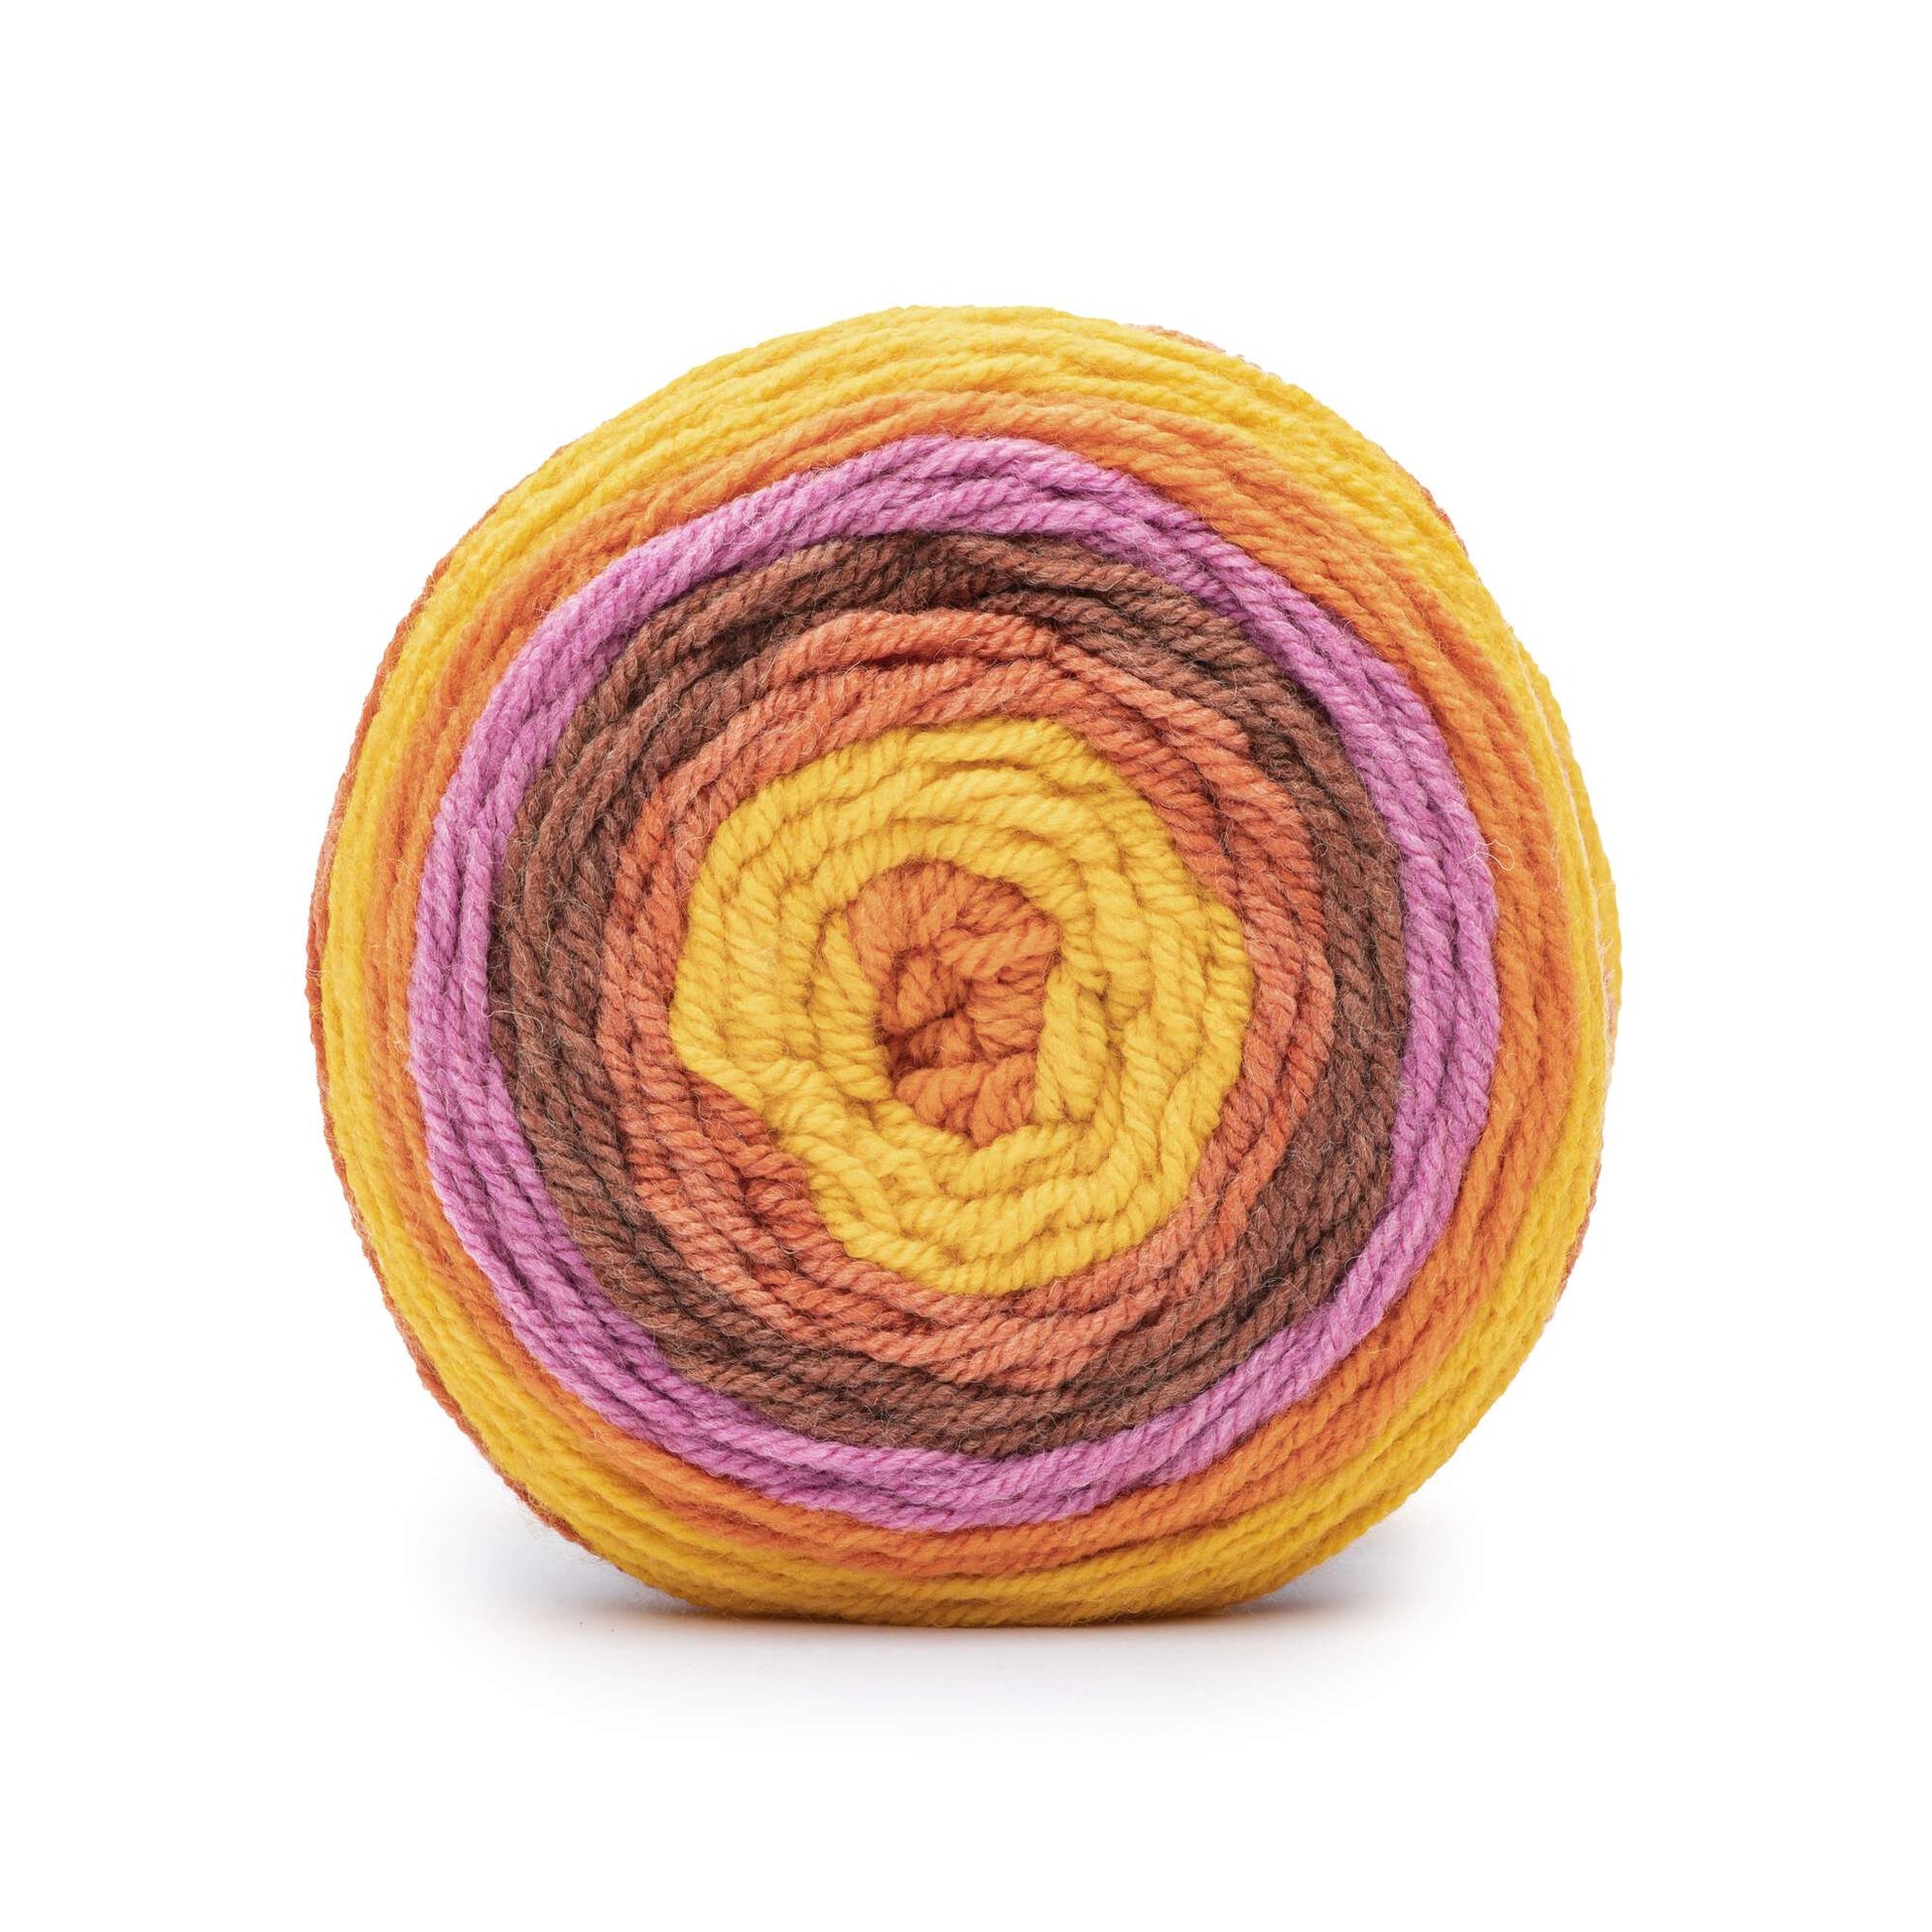 Caron Cakes Yarn, Rainbow Sprinkles